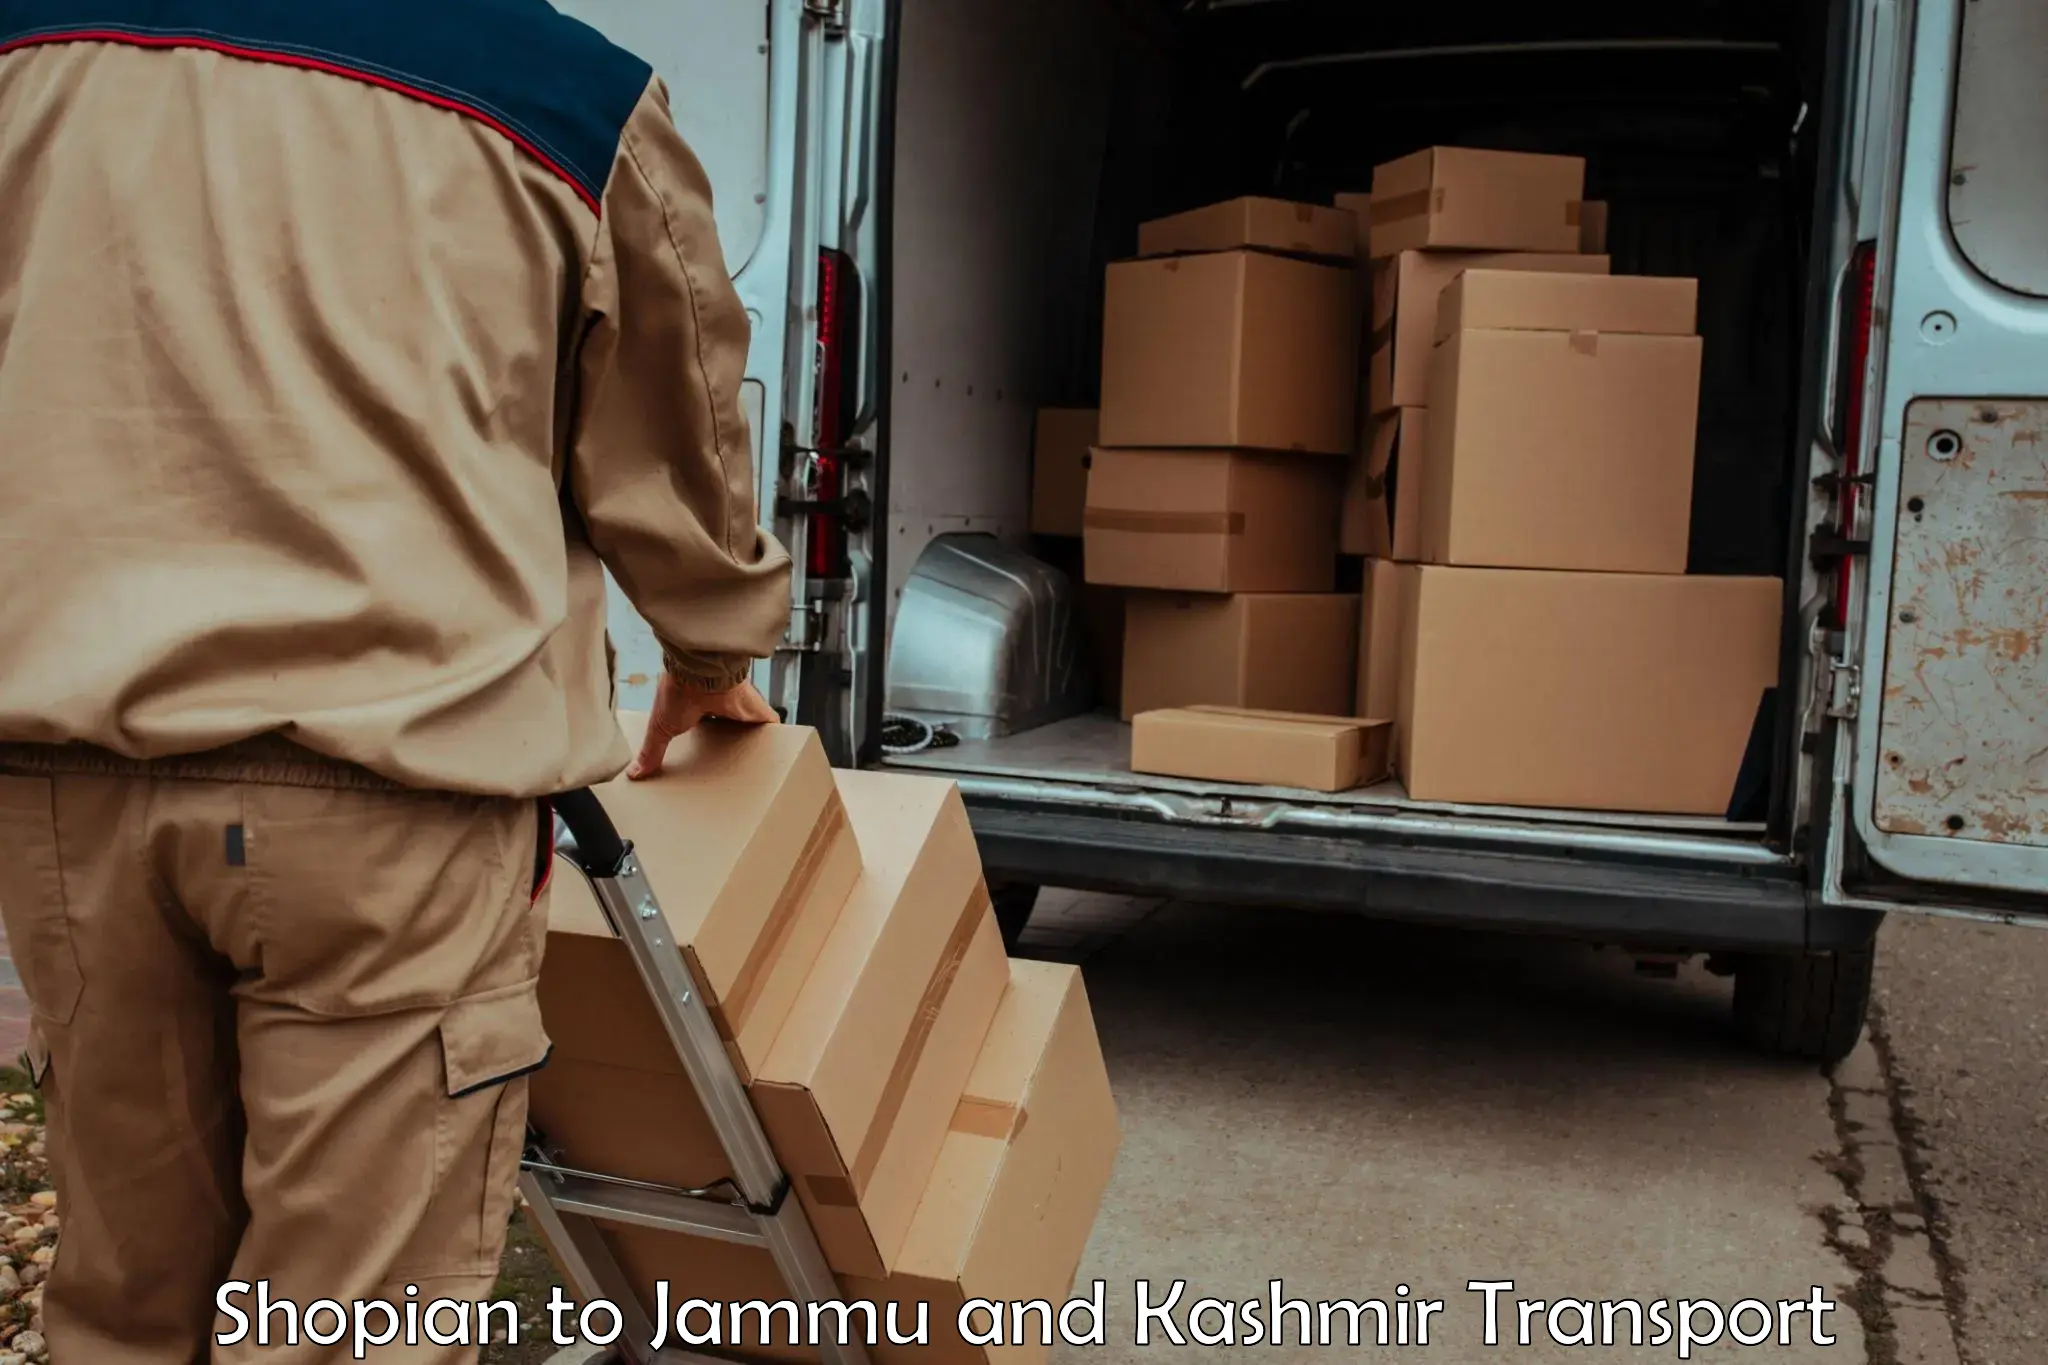 Nearest transport service Shopian to Jammu and Kashmir